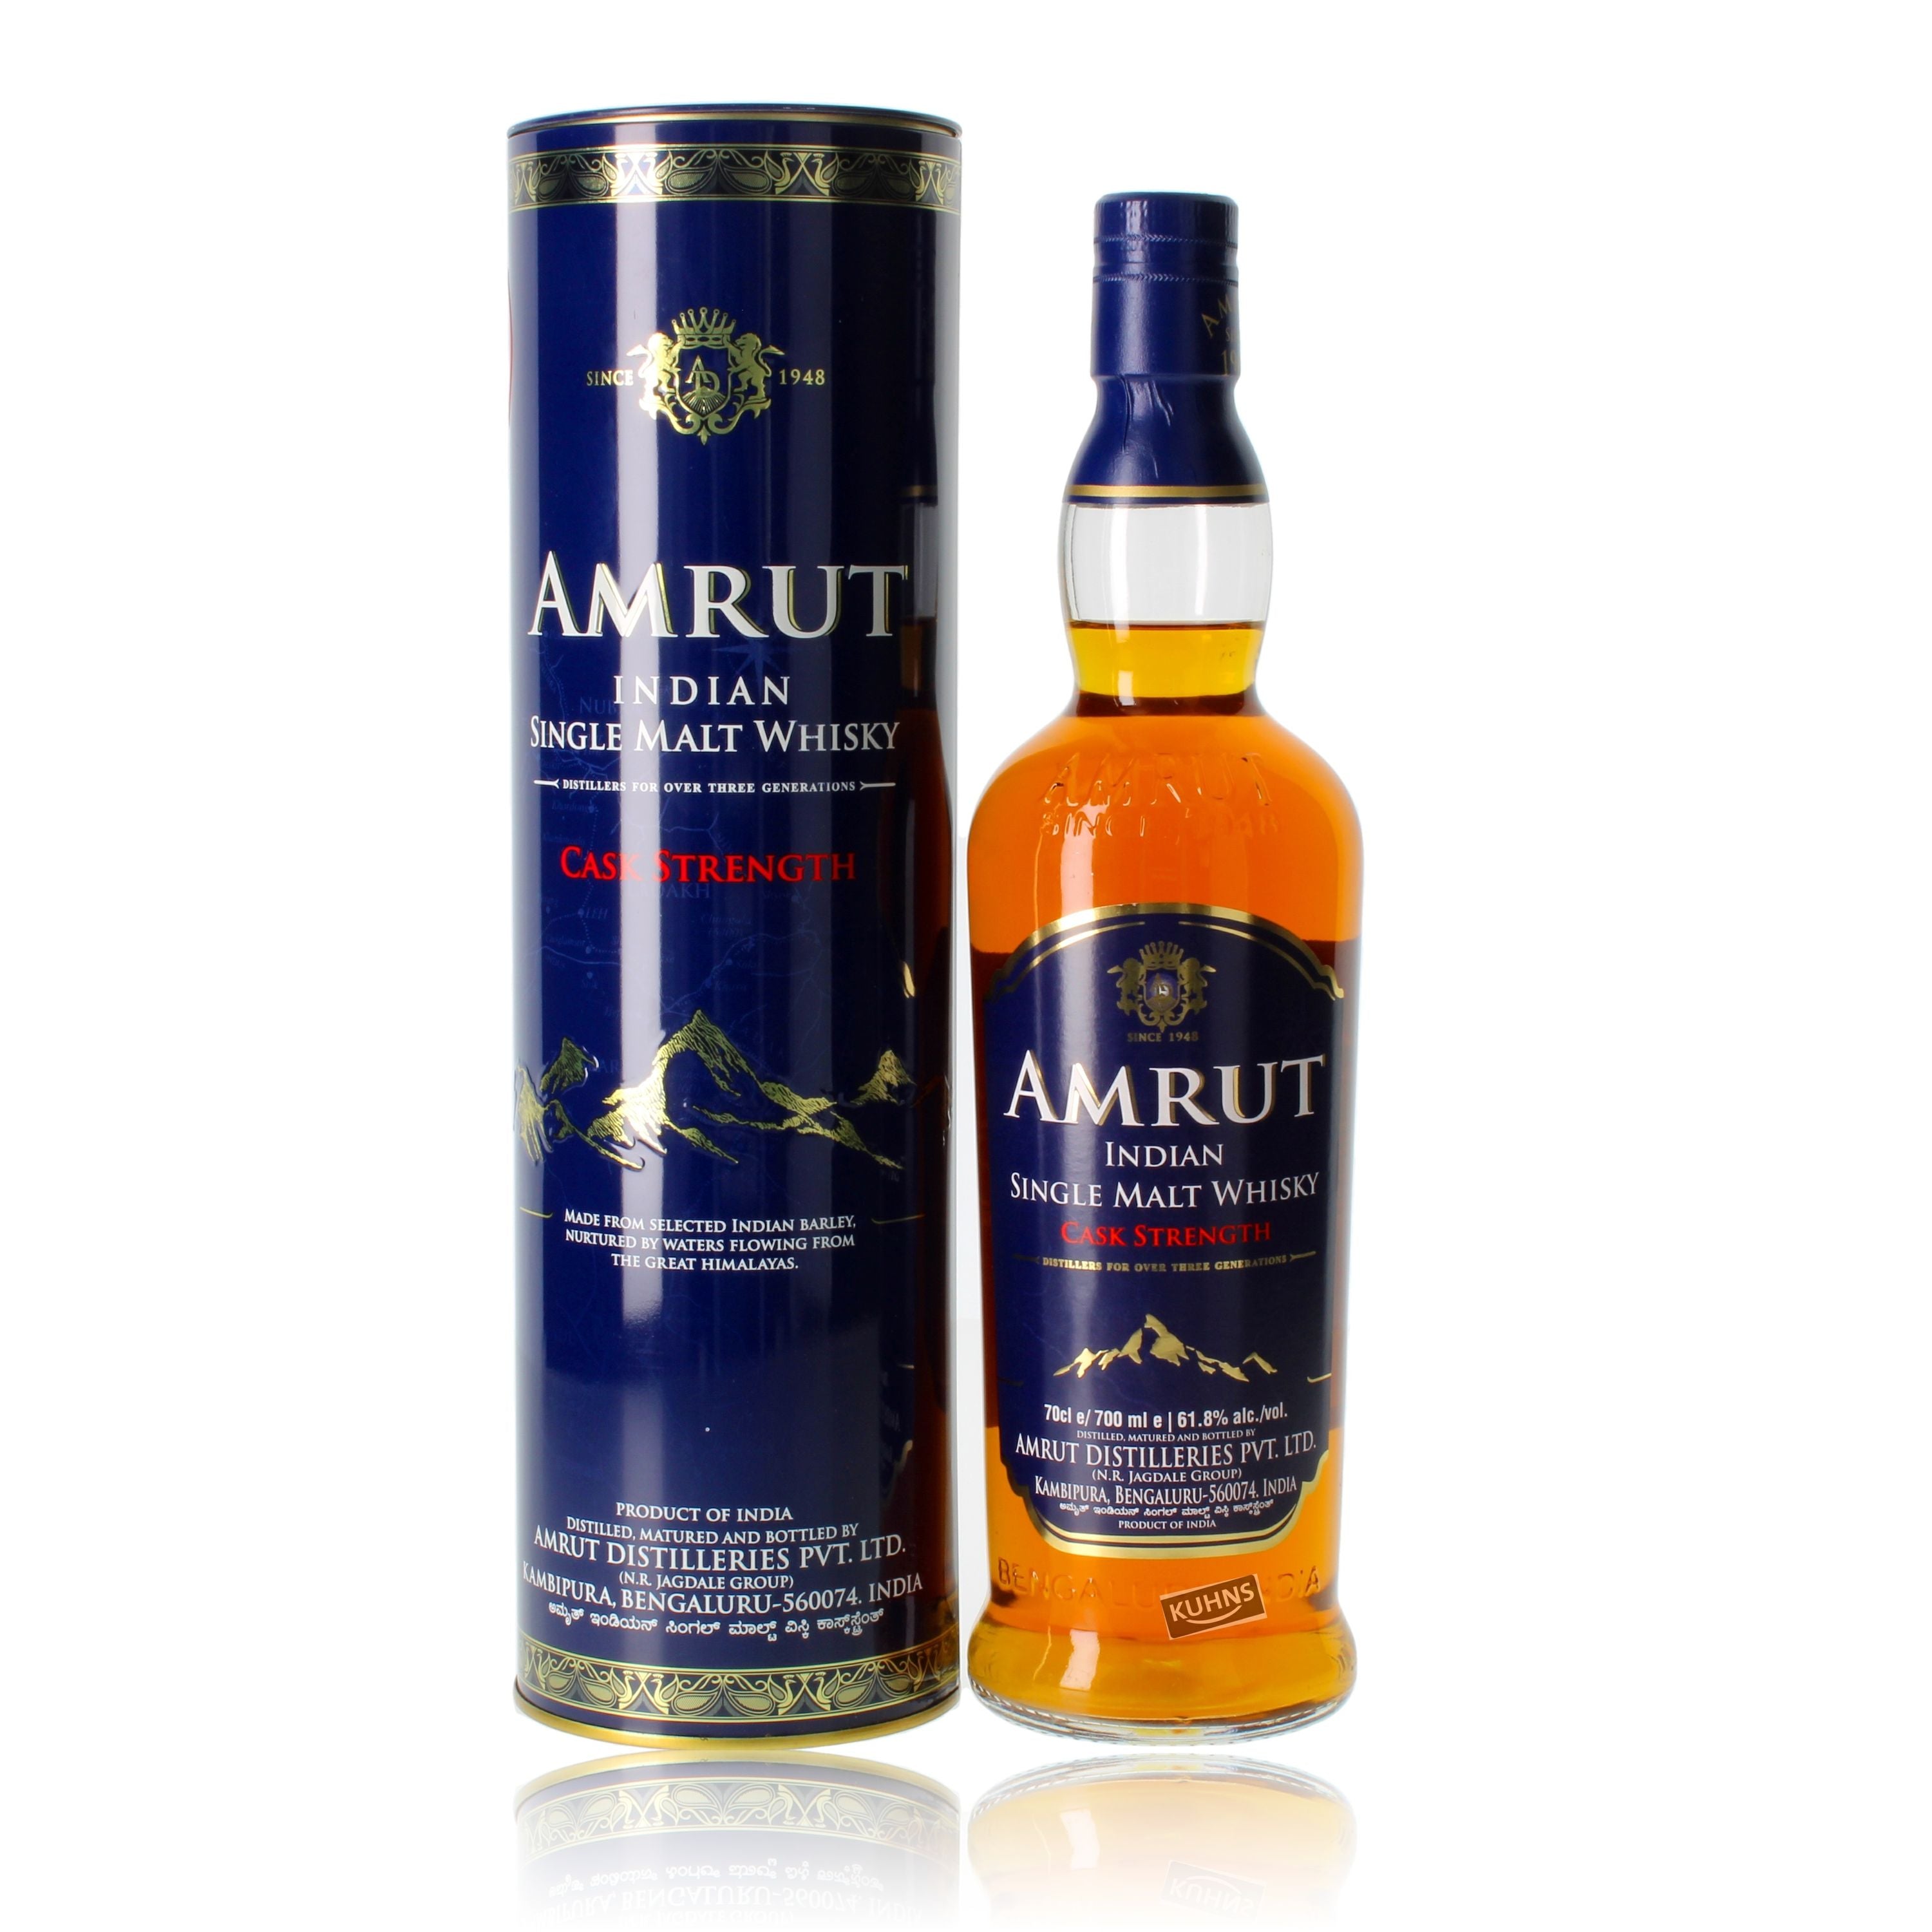 Amrut Cask Strength Indian Single Malt Whiskey 0.7l, alc. 61.8% by volume